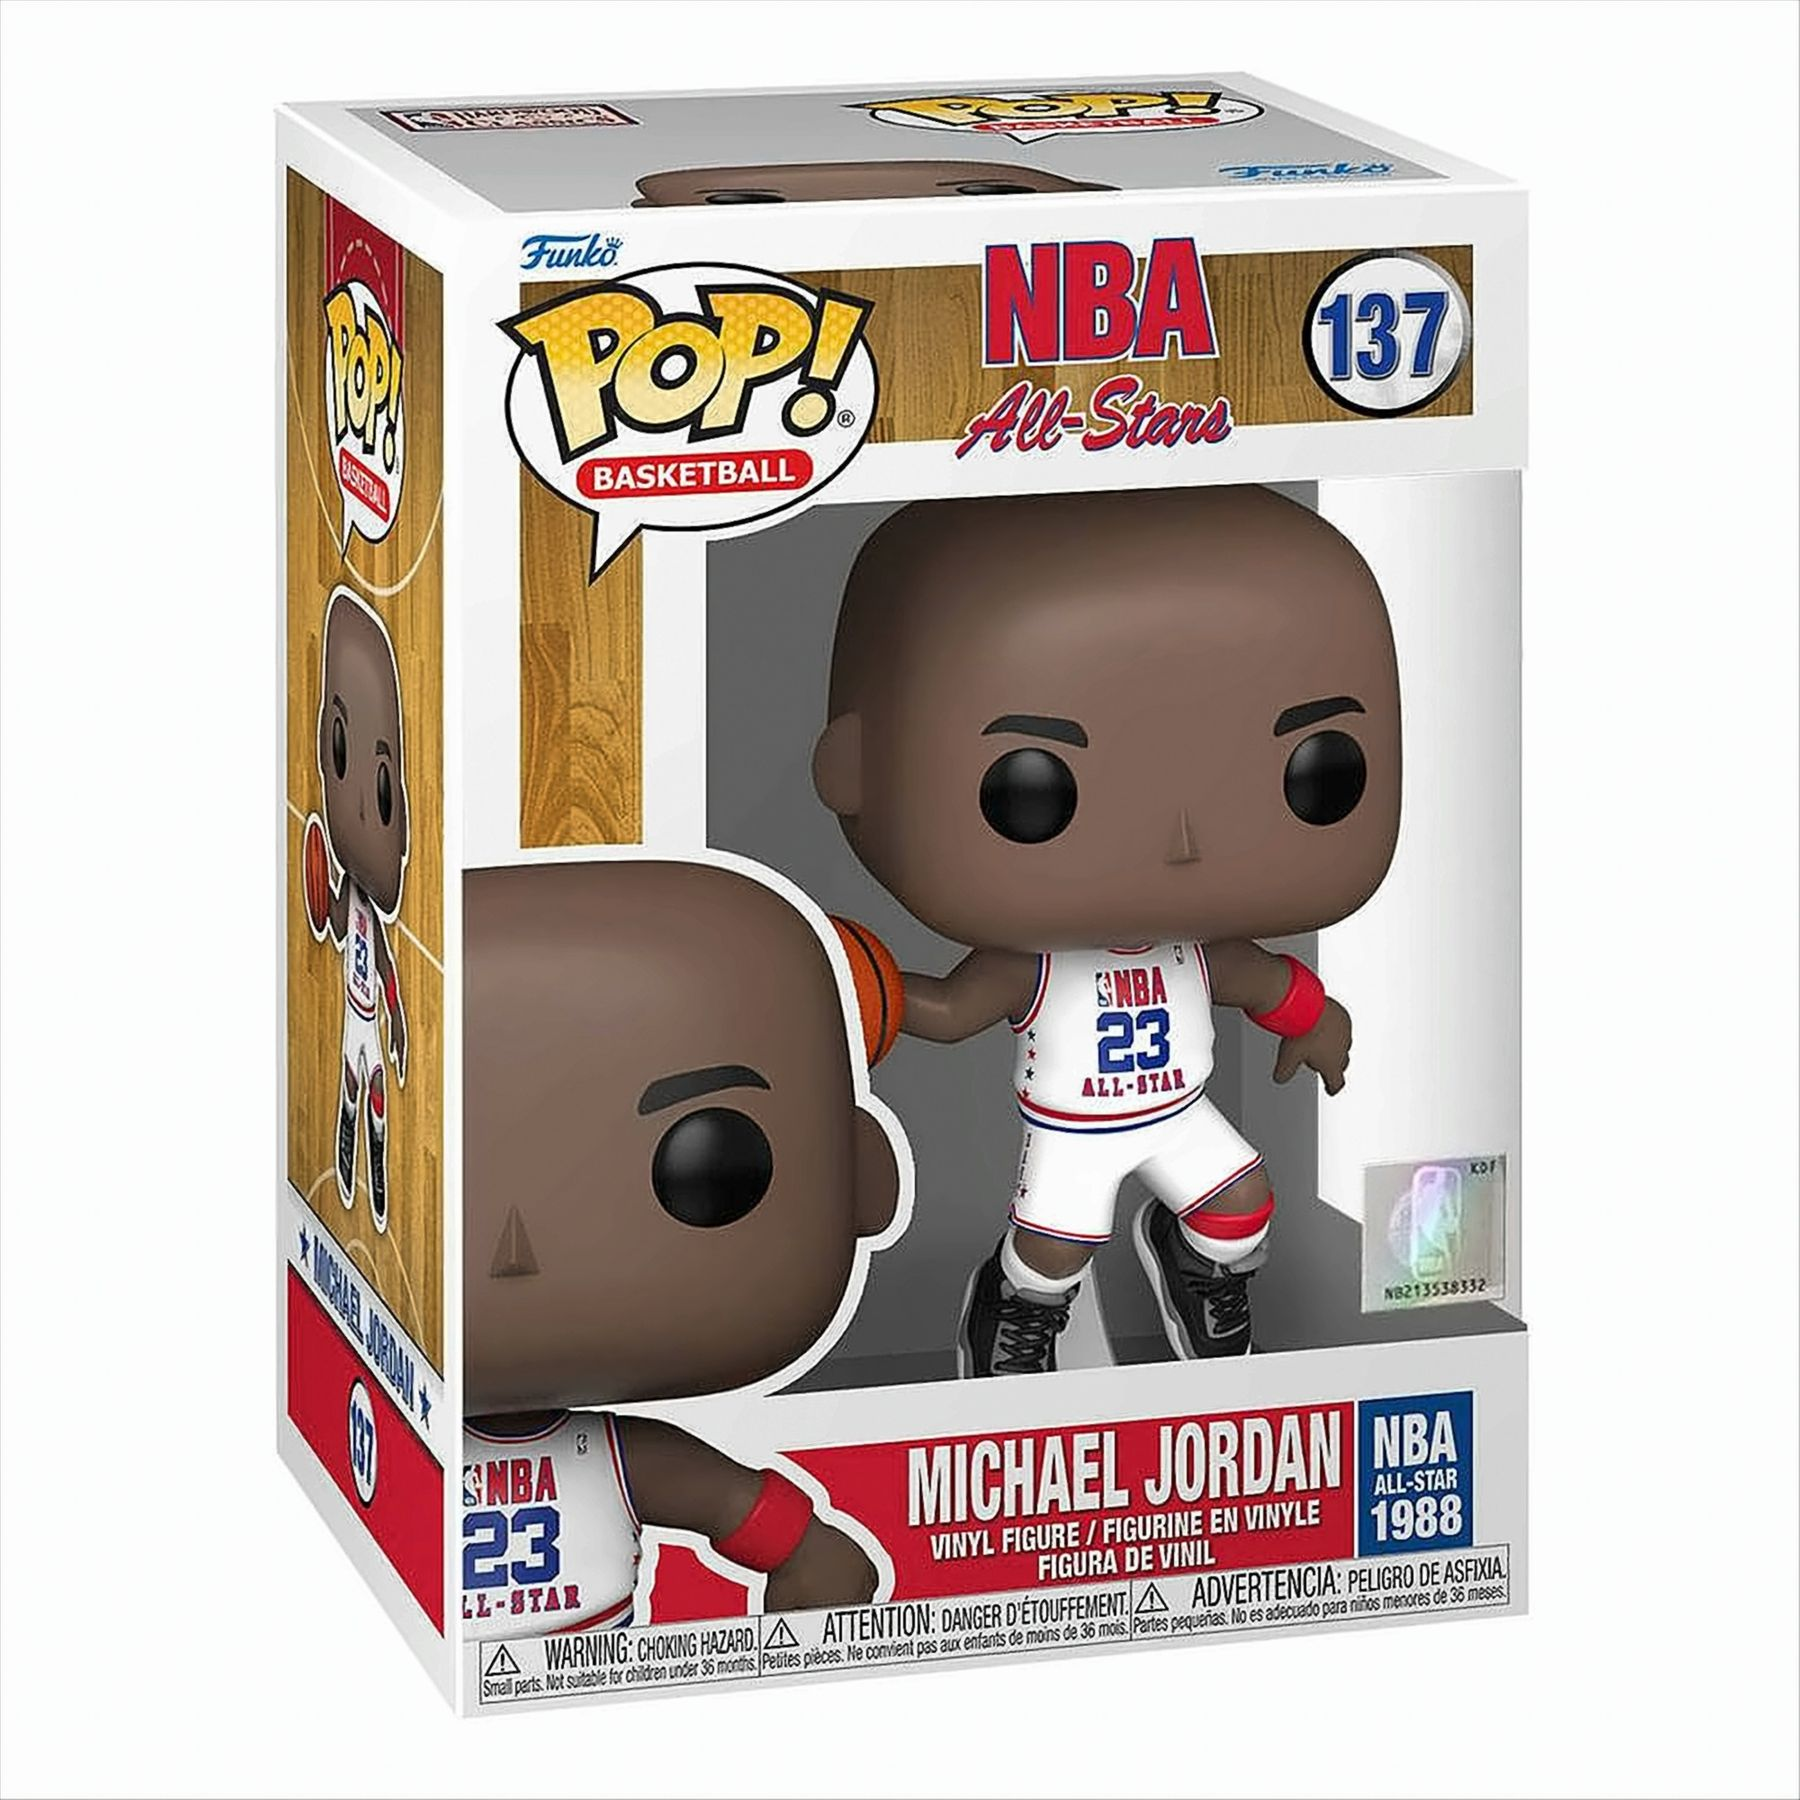 Legends POP NBA Stars - - Michael -NBA Jordan/All